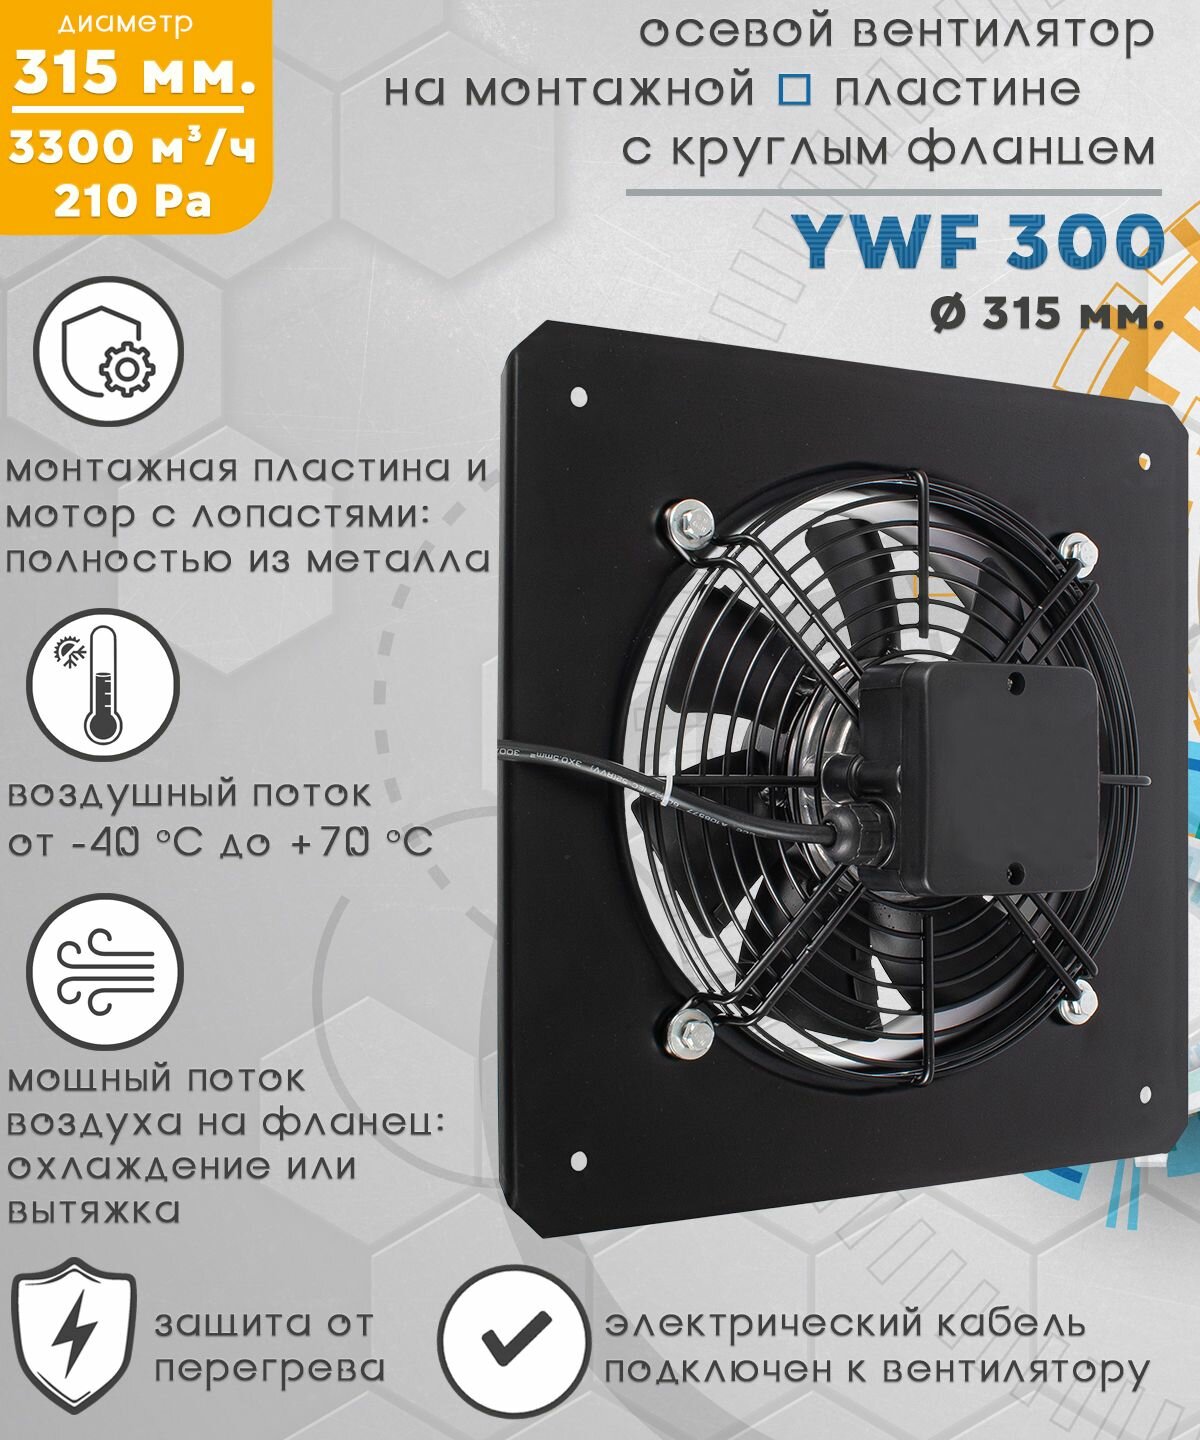 YWF-2E-300 вентилятор осевой с монтажной пластиной 3300 куб. м/ч. 210 Па, с фланцем диаметр 315 мм